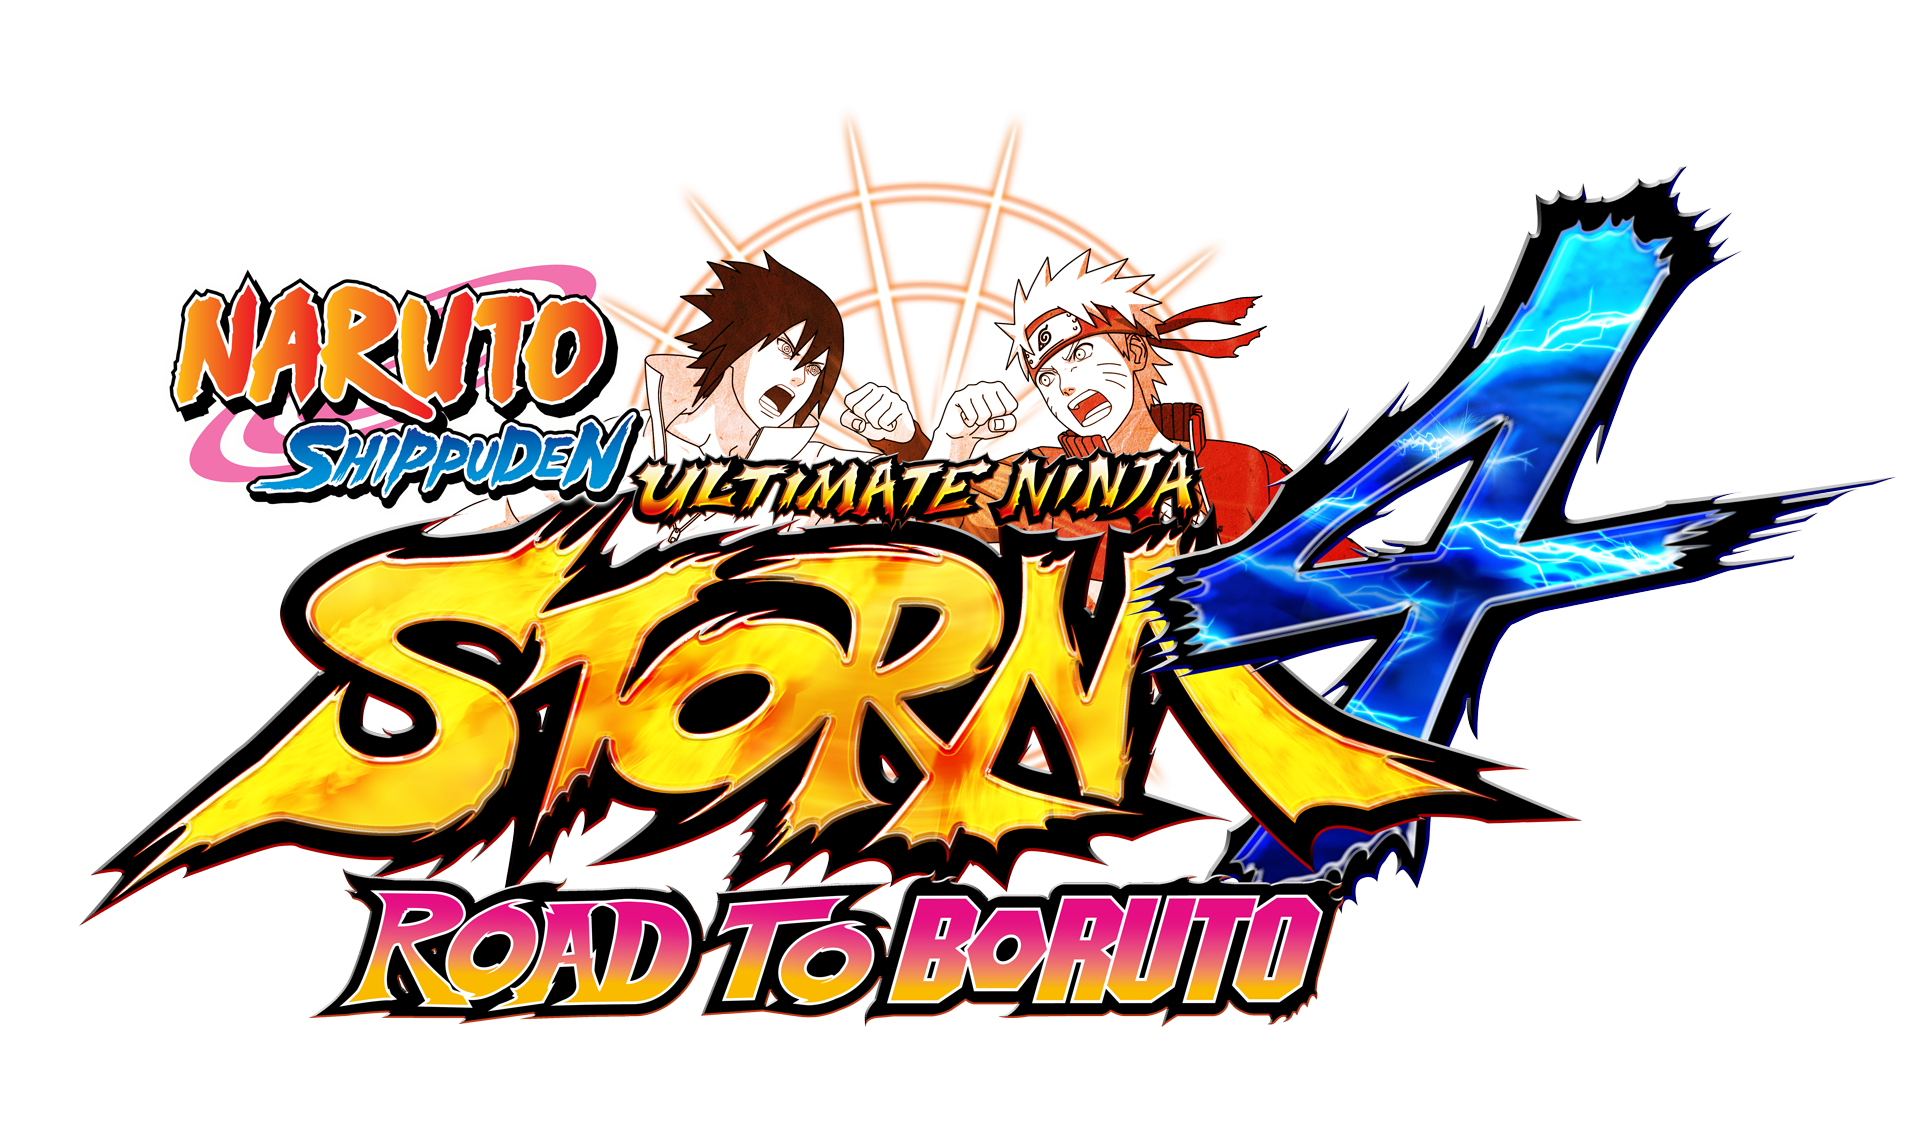 naruto shippuden ultimate ninja storm 4 road to boruto character list